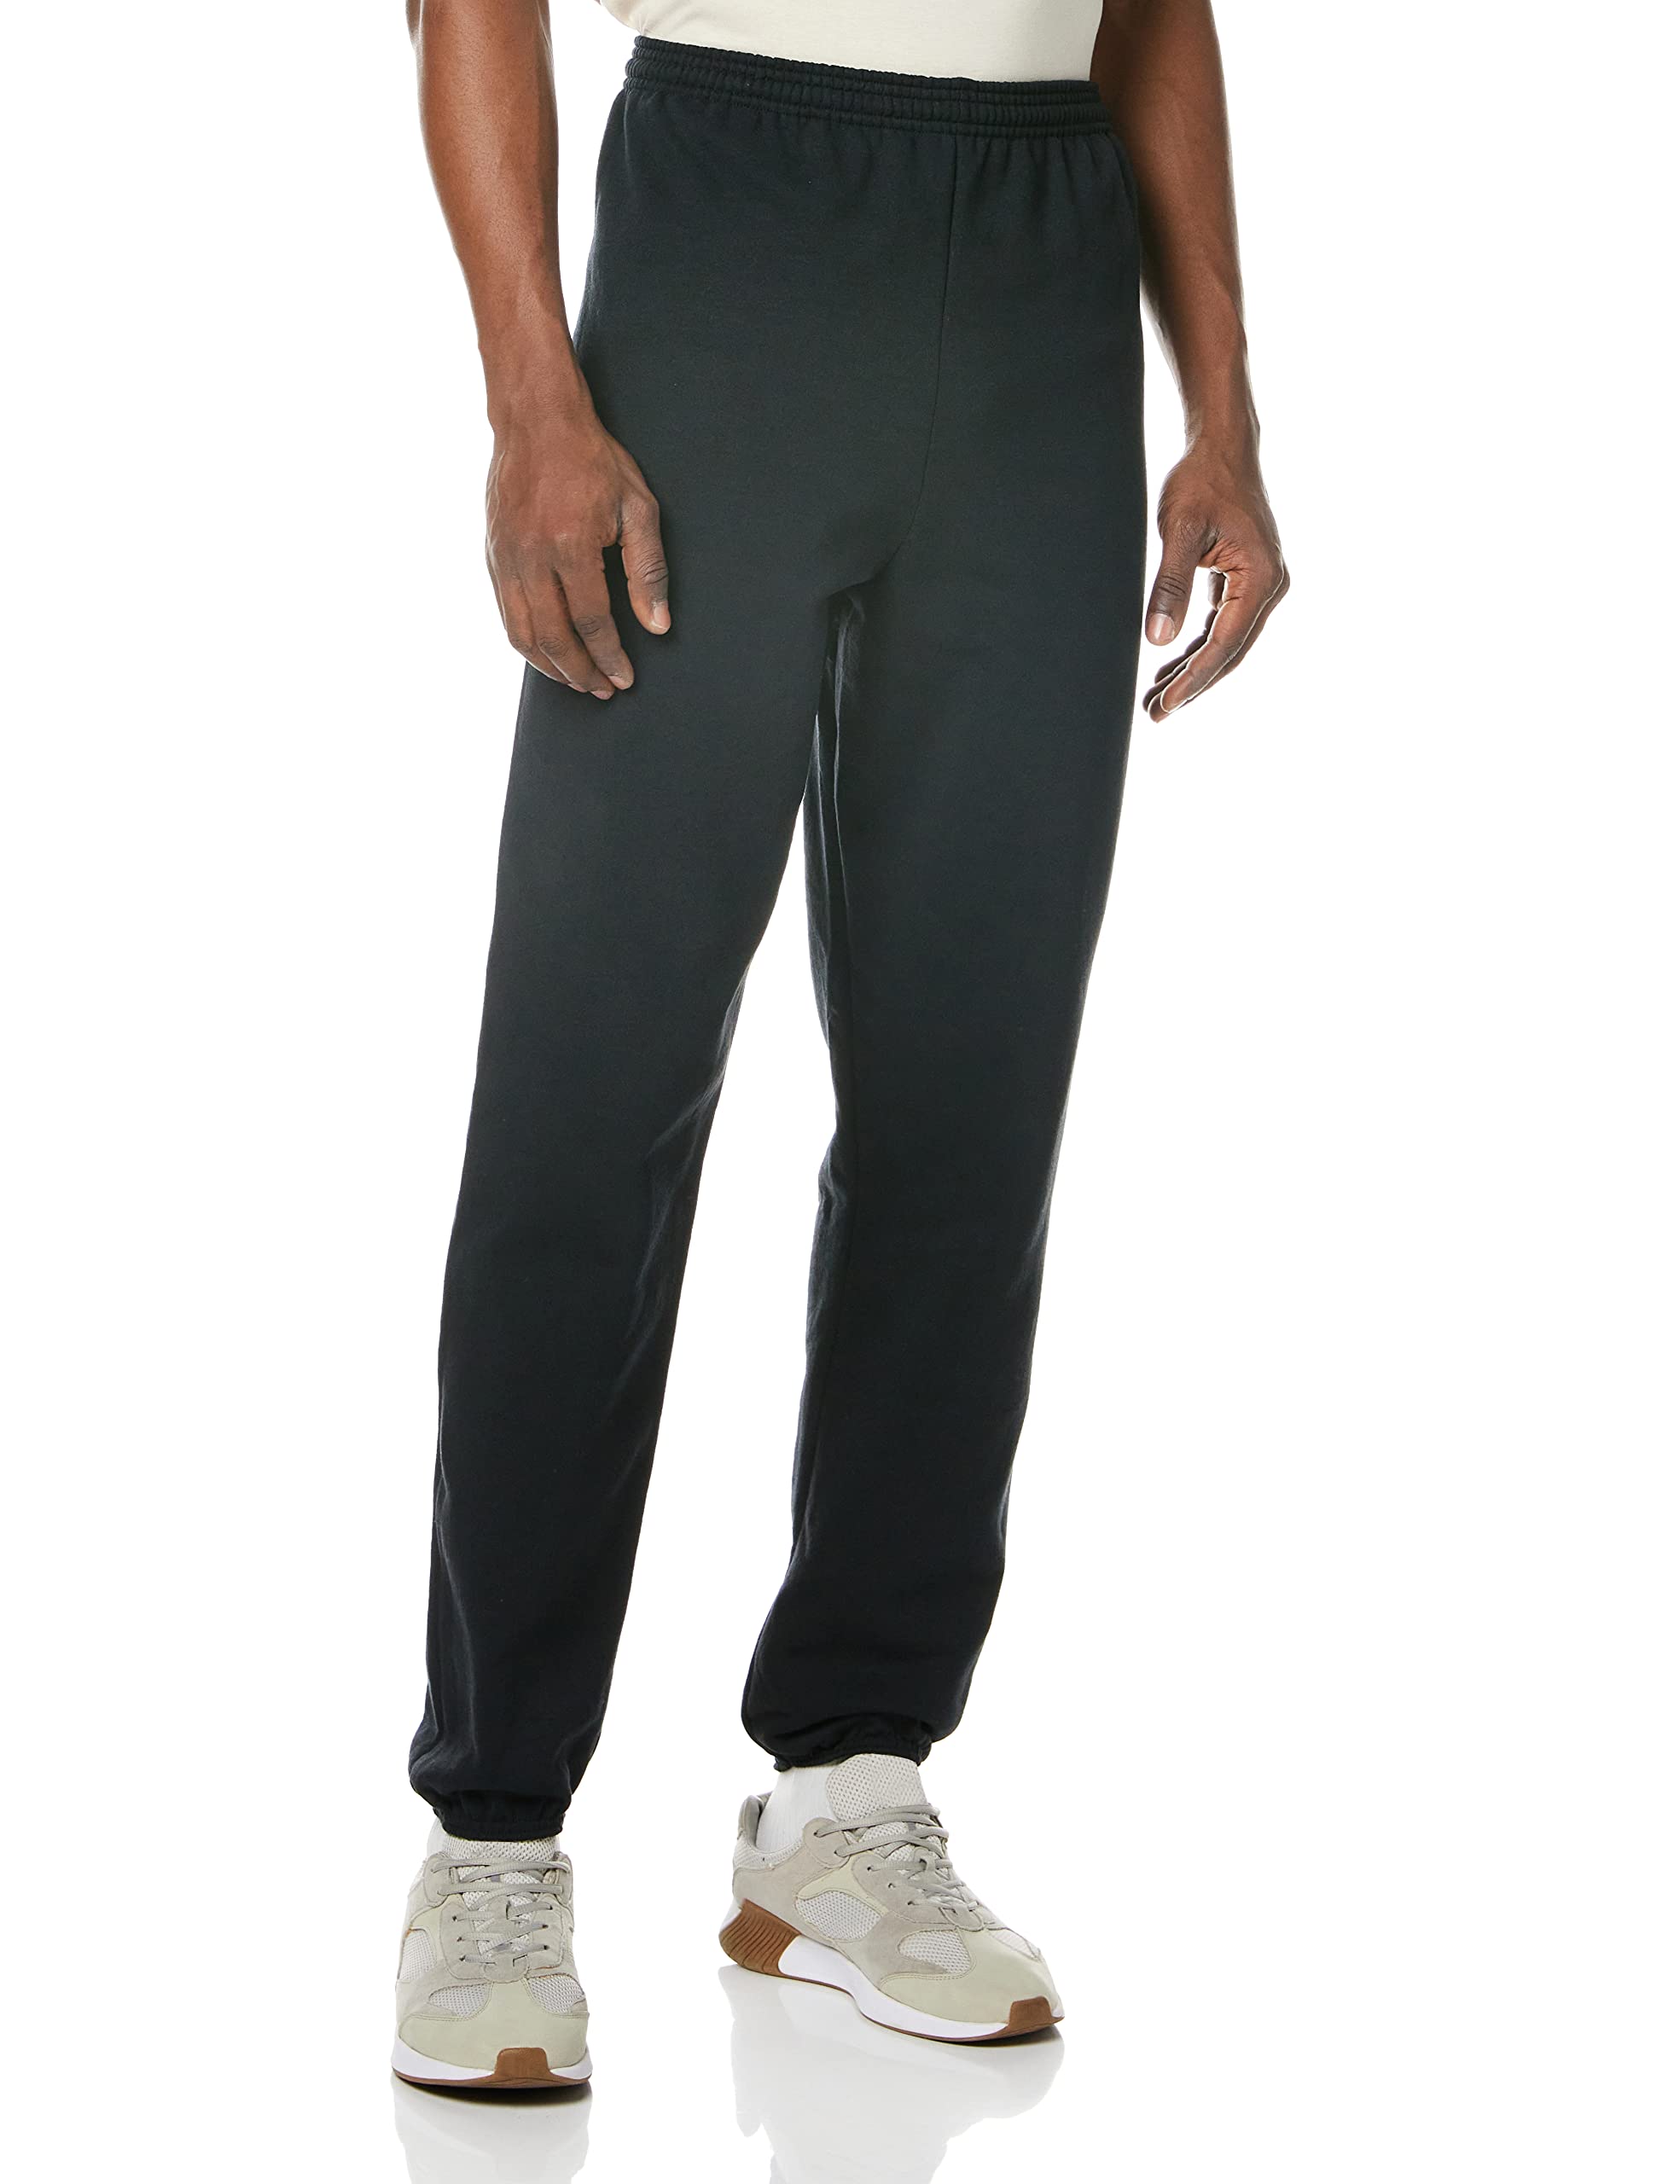 Hanes Men's Sweatpants, EcoSmart Best Sweatpants for Men, Men's Athletic Lounge Pants with Cinched Cuffs (1 or 2 Pack Option)